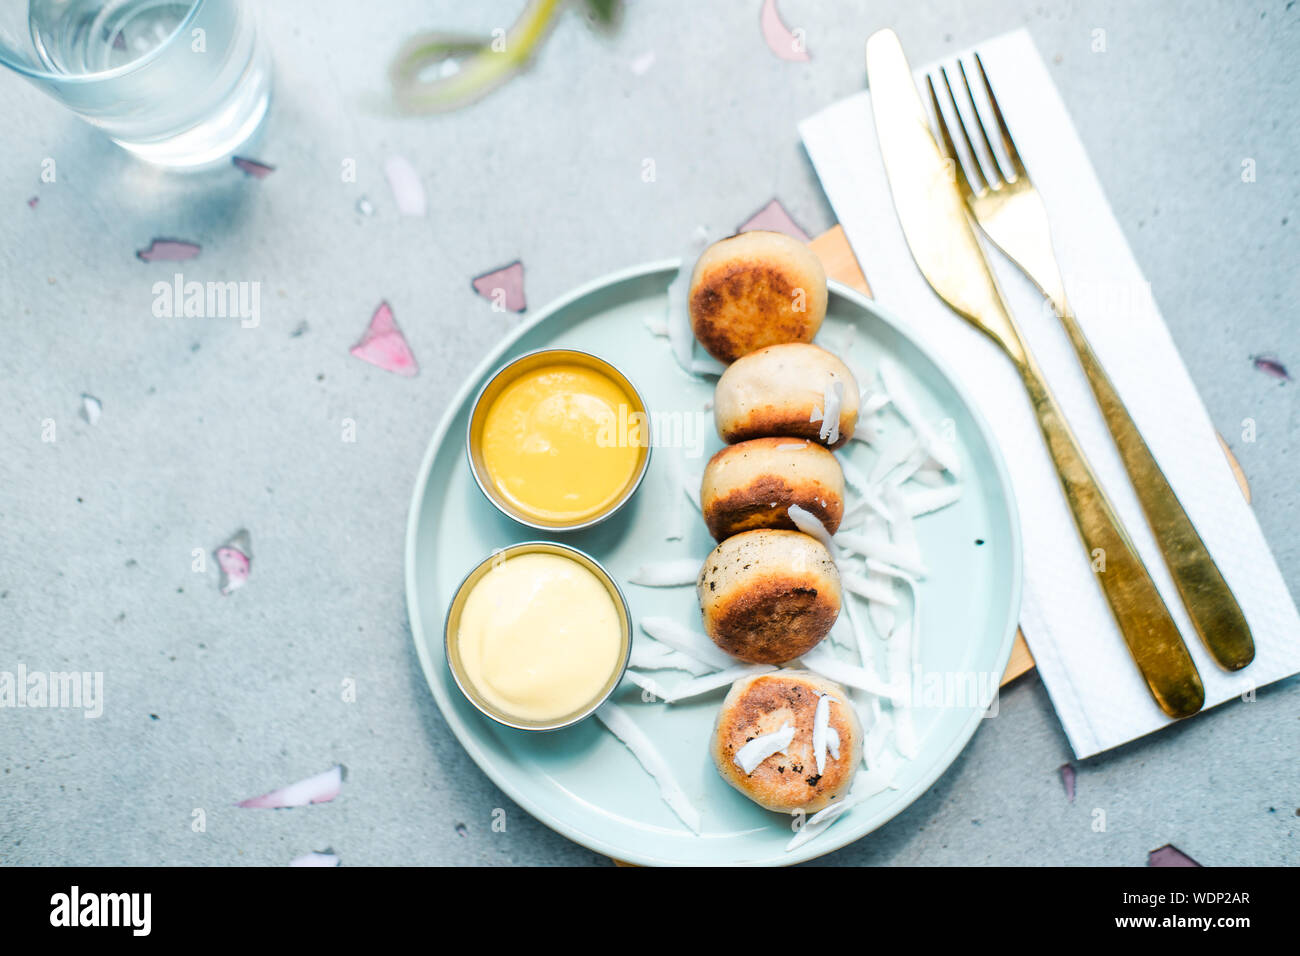 Vegan tofu cheese pancakes on blue plate, gray concrete table. Sun light. Food blog photography concept. Overhead Stock Photo